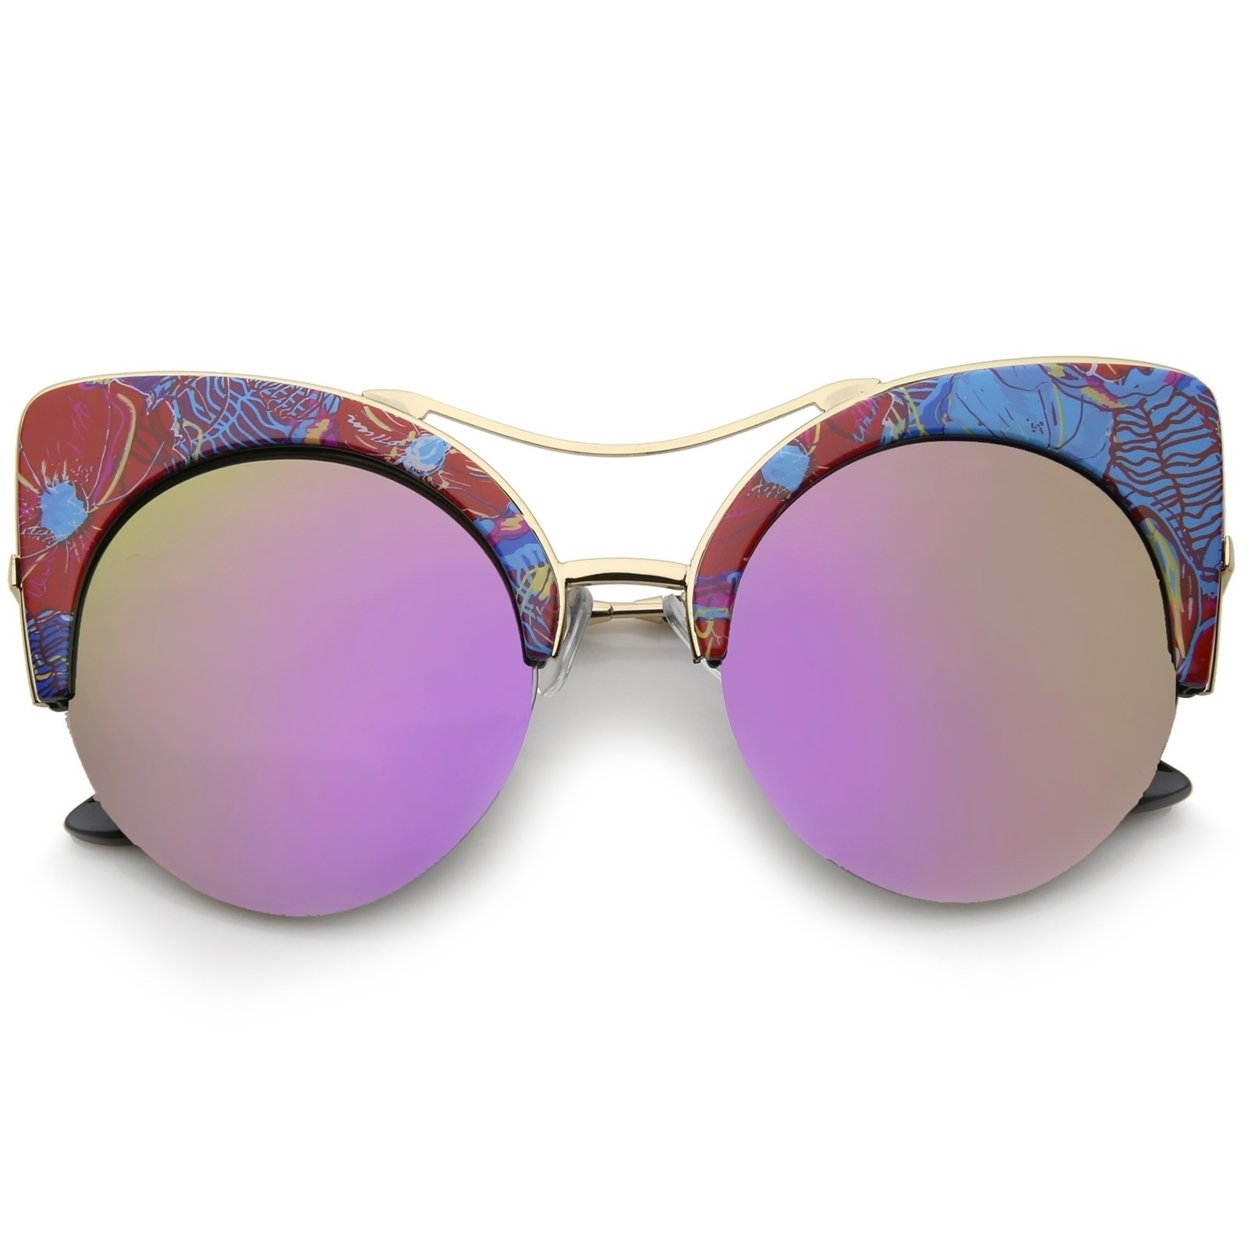 Women's Flat Lens Floral Print Semi-Rimless Round Cat Eye Sunglasses 52mm - Green-Blue-Floral / Blue Mirror